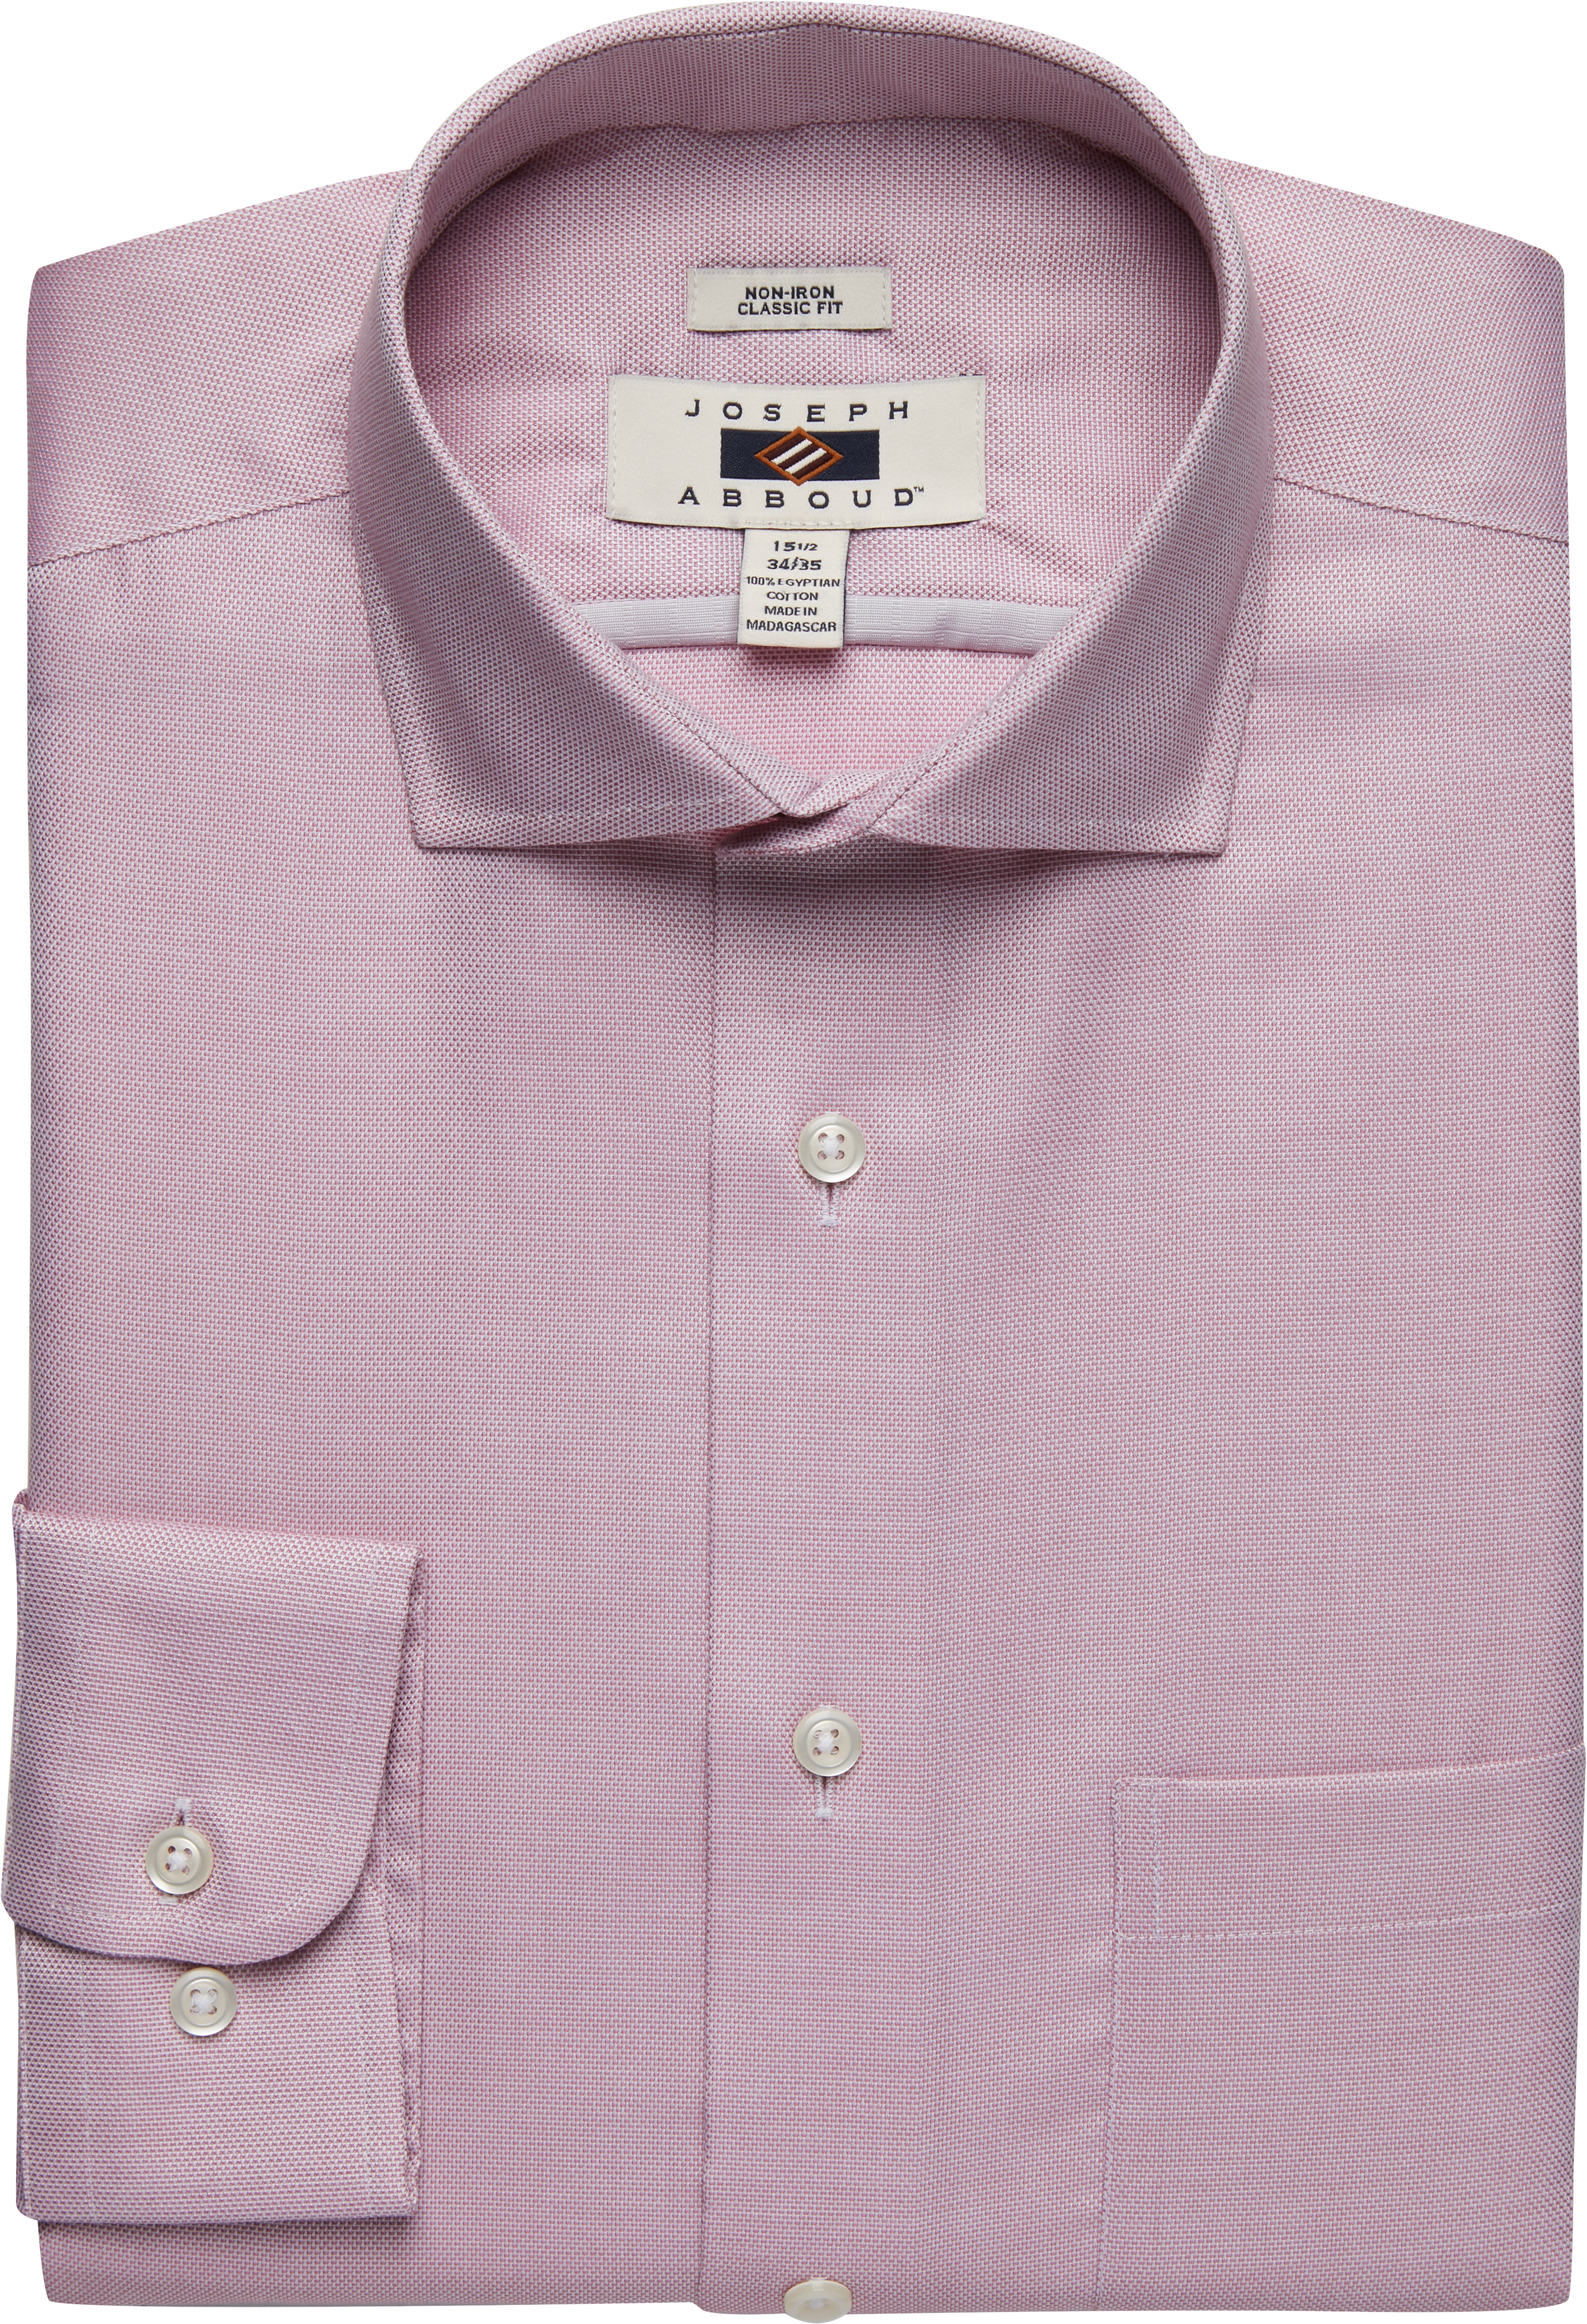 Joseph Abboud Burgundy Dot Classic Fit Dress Shirt - Men's Shirts | Men ...